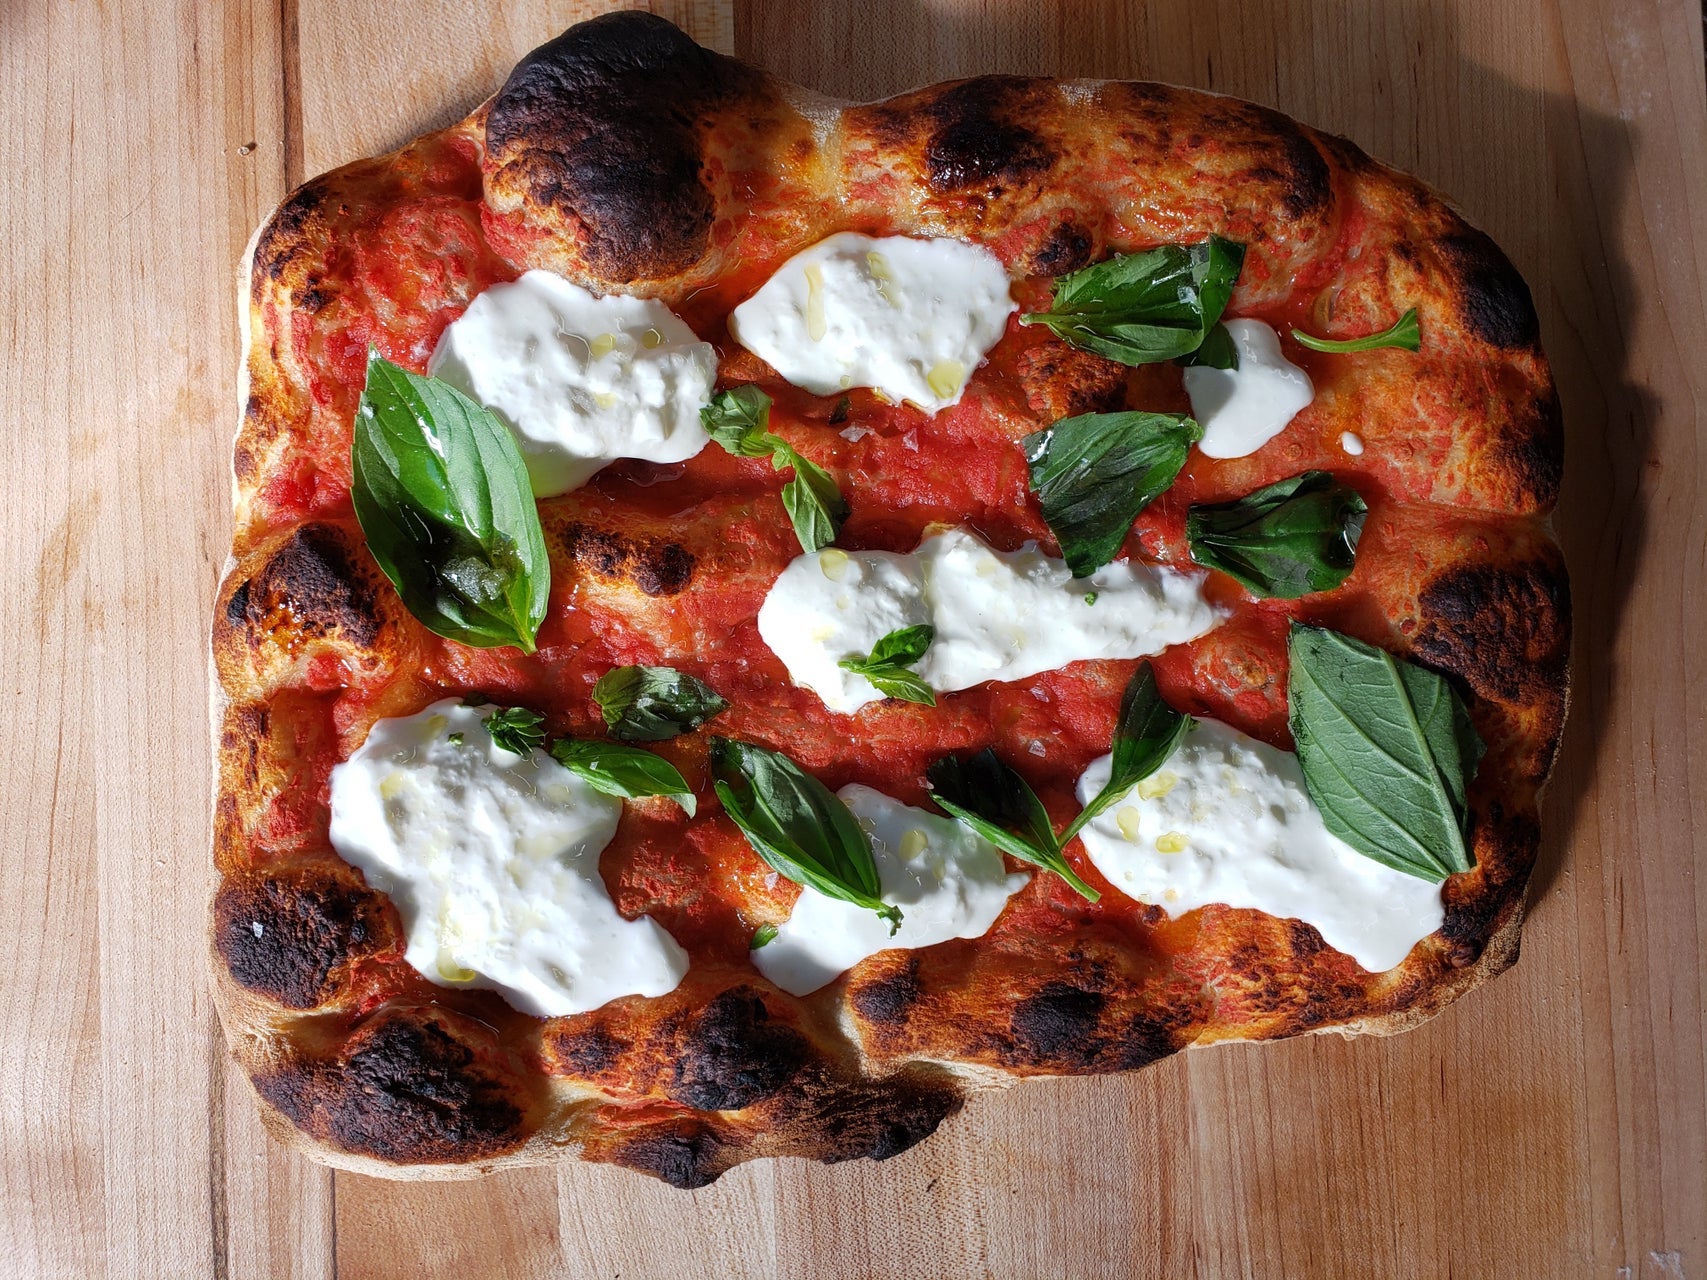 The namesake Stracci pizza has fresh stracciatella cheese, tomato, basil, and olive oil